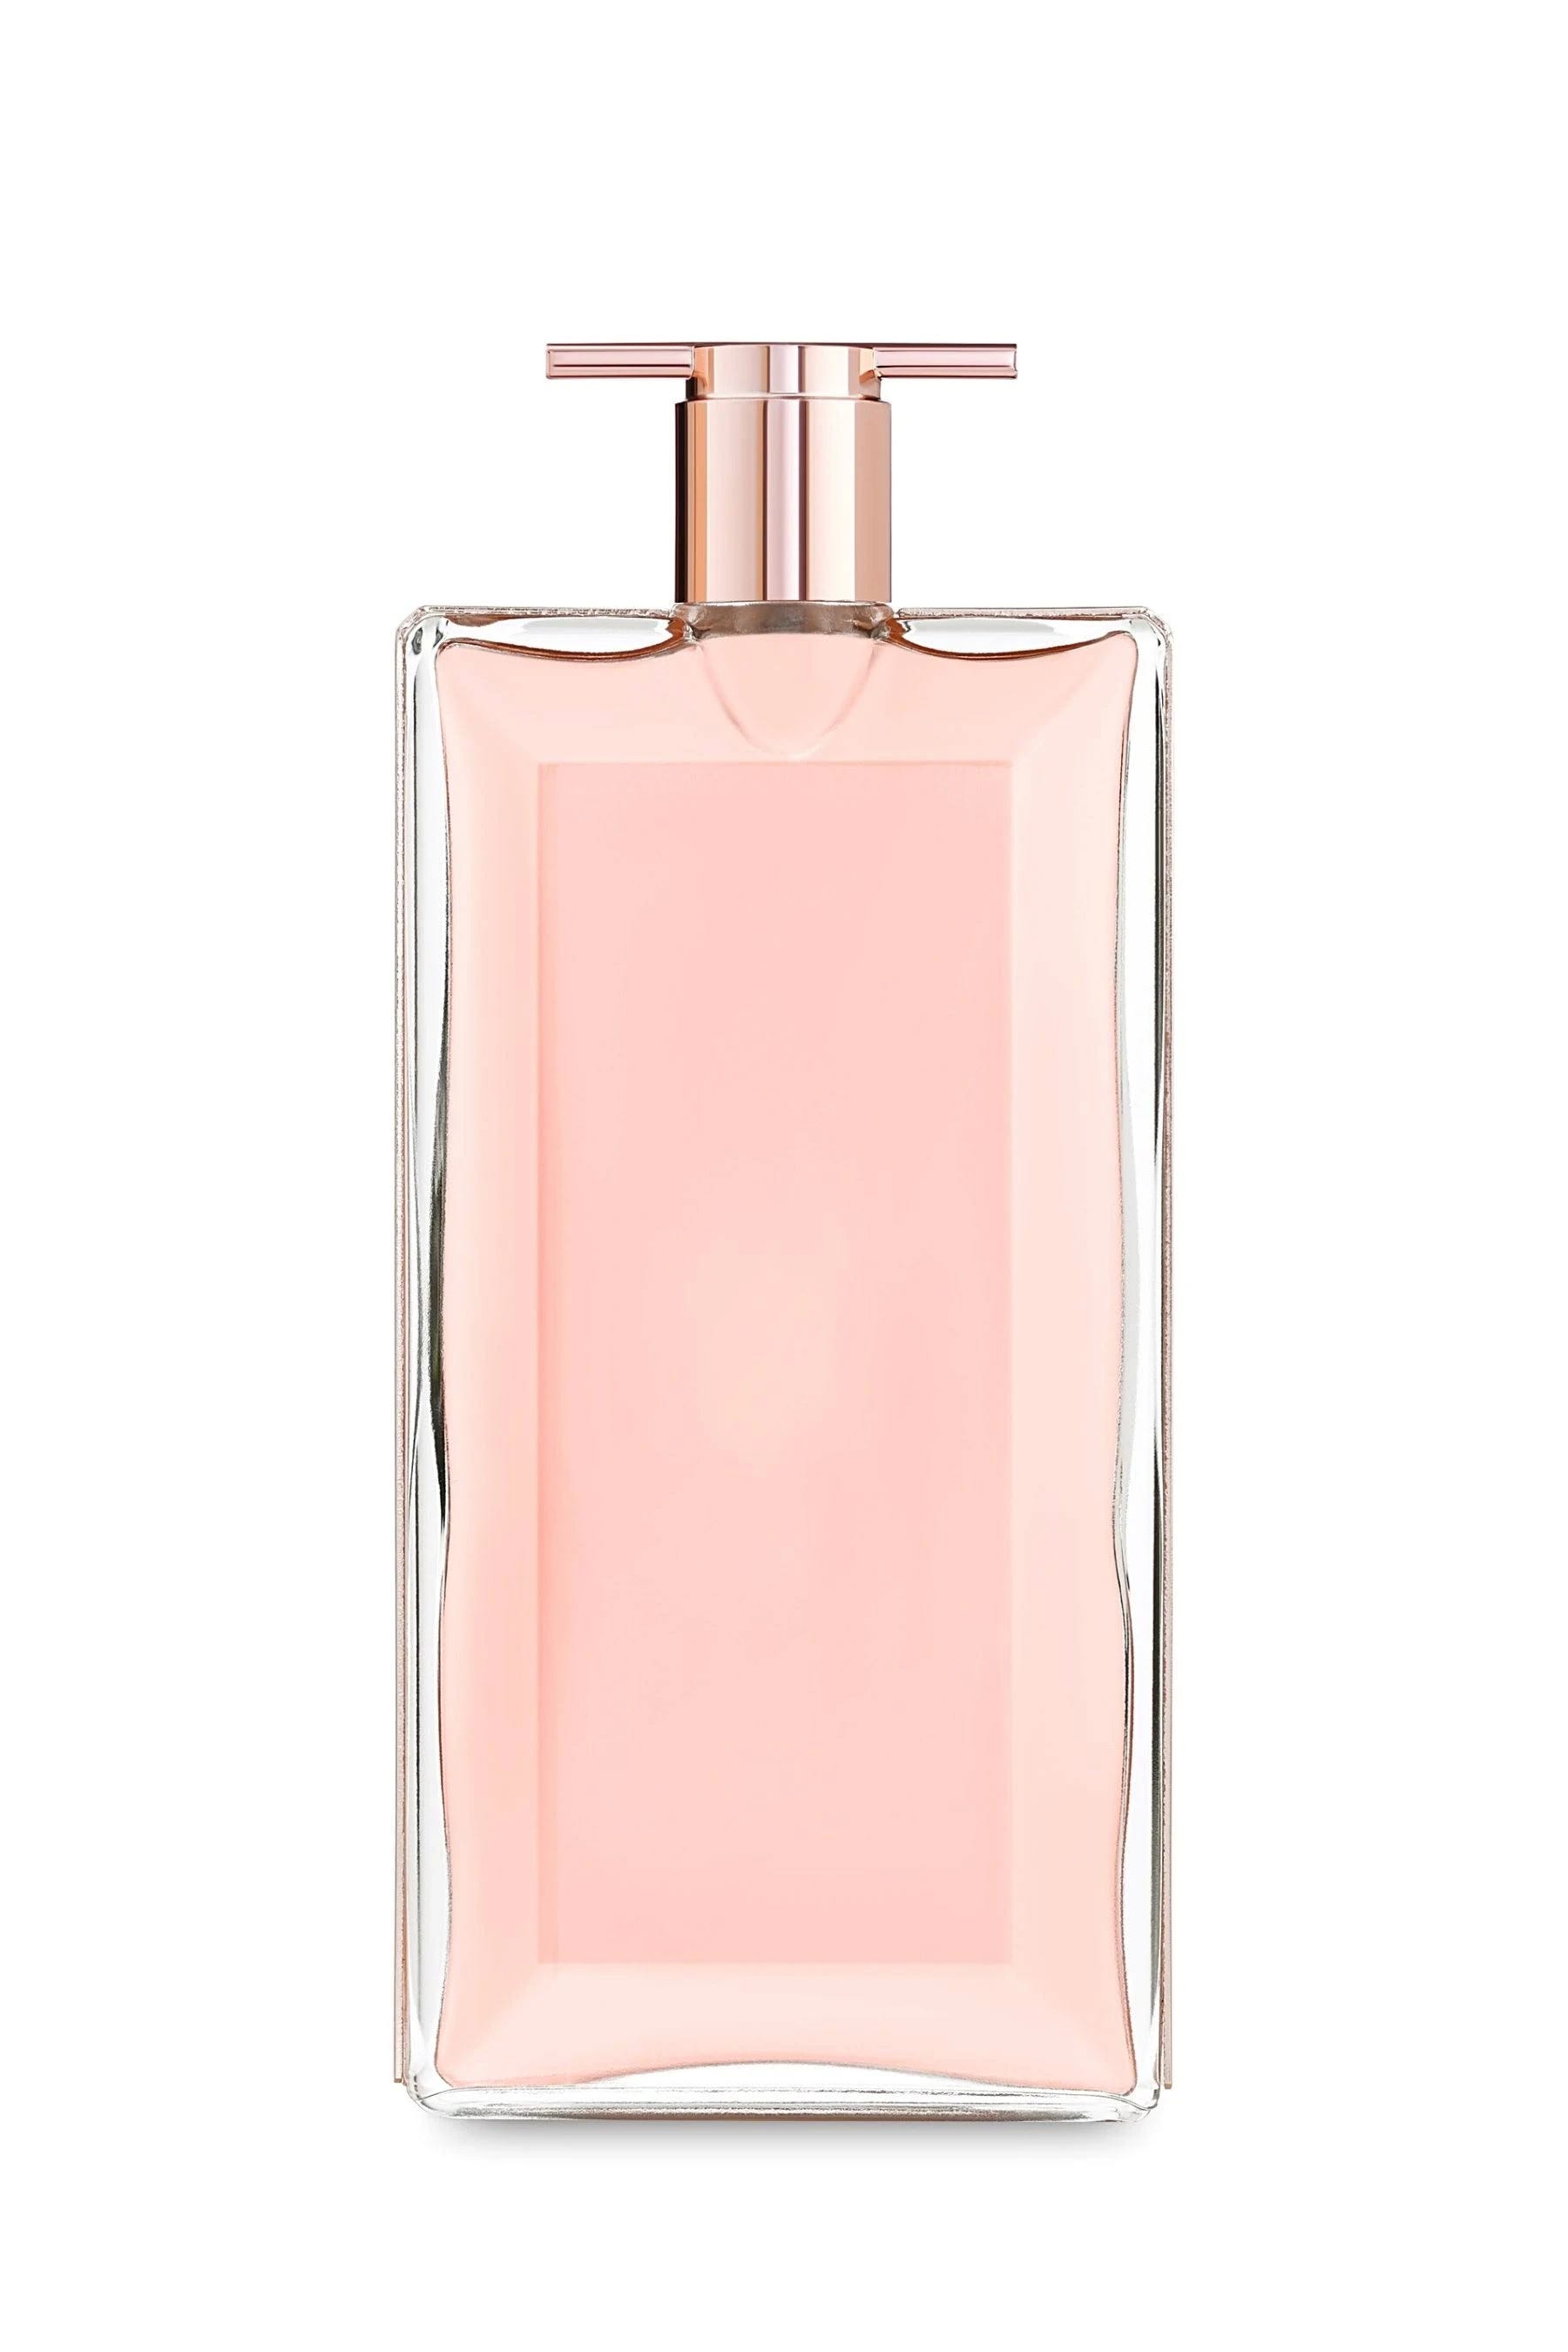 Lancome Idole Eau de Parfum Spray: Enjoy the Luxury of Scent | Image